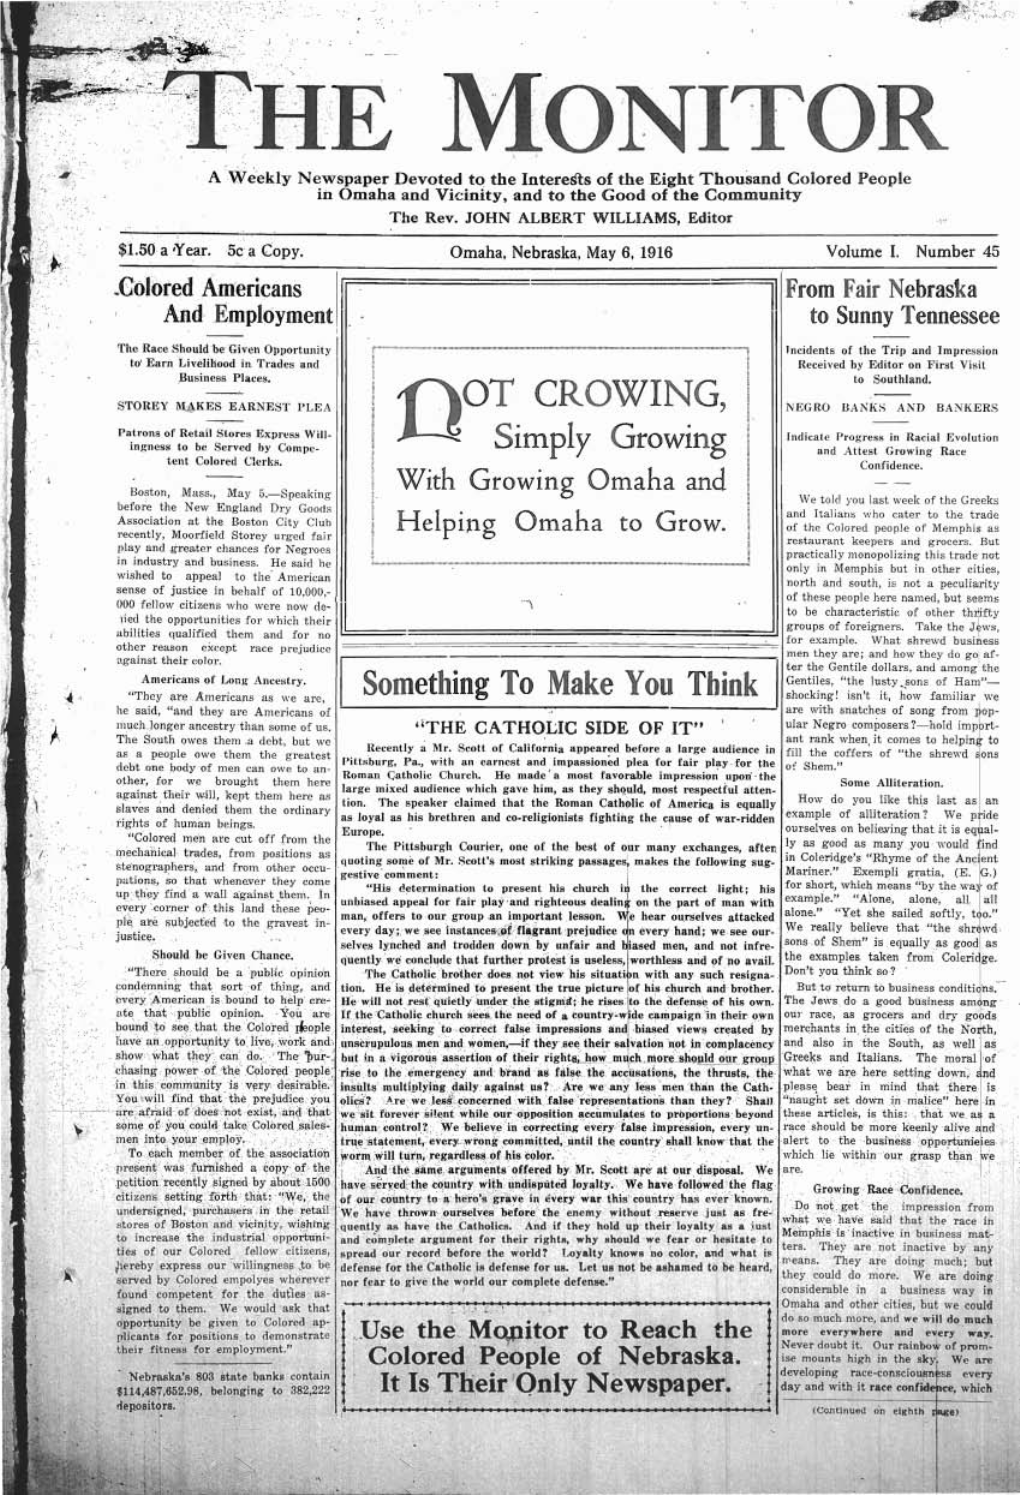 May 6, 1916 Volume I